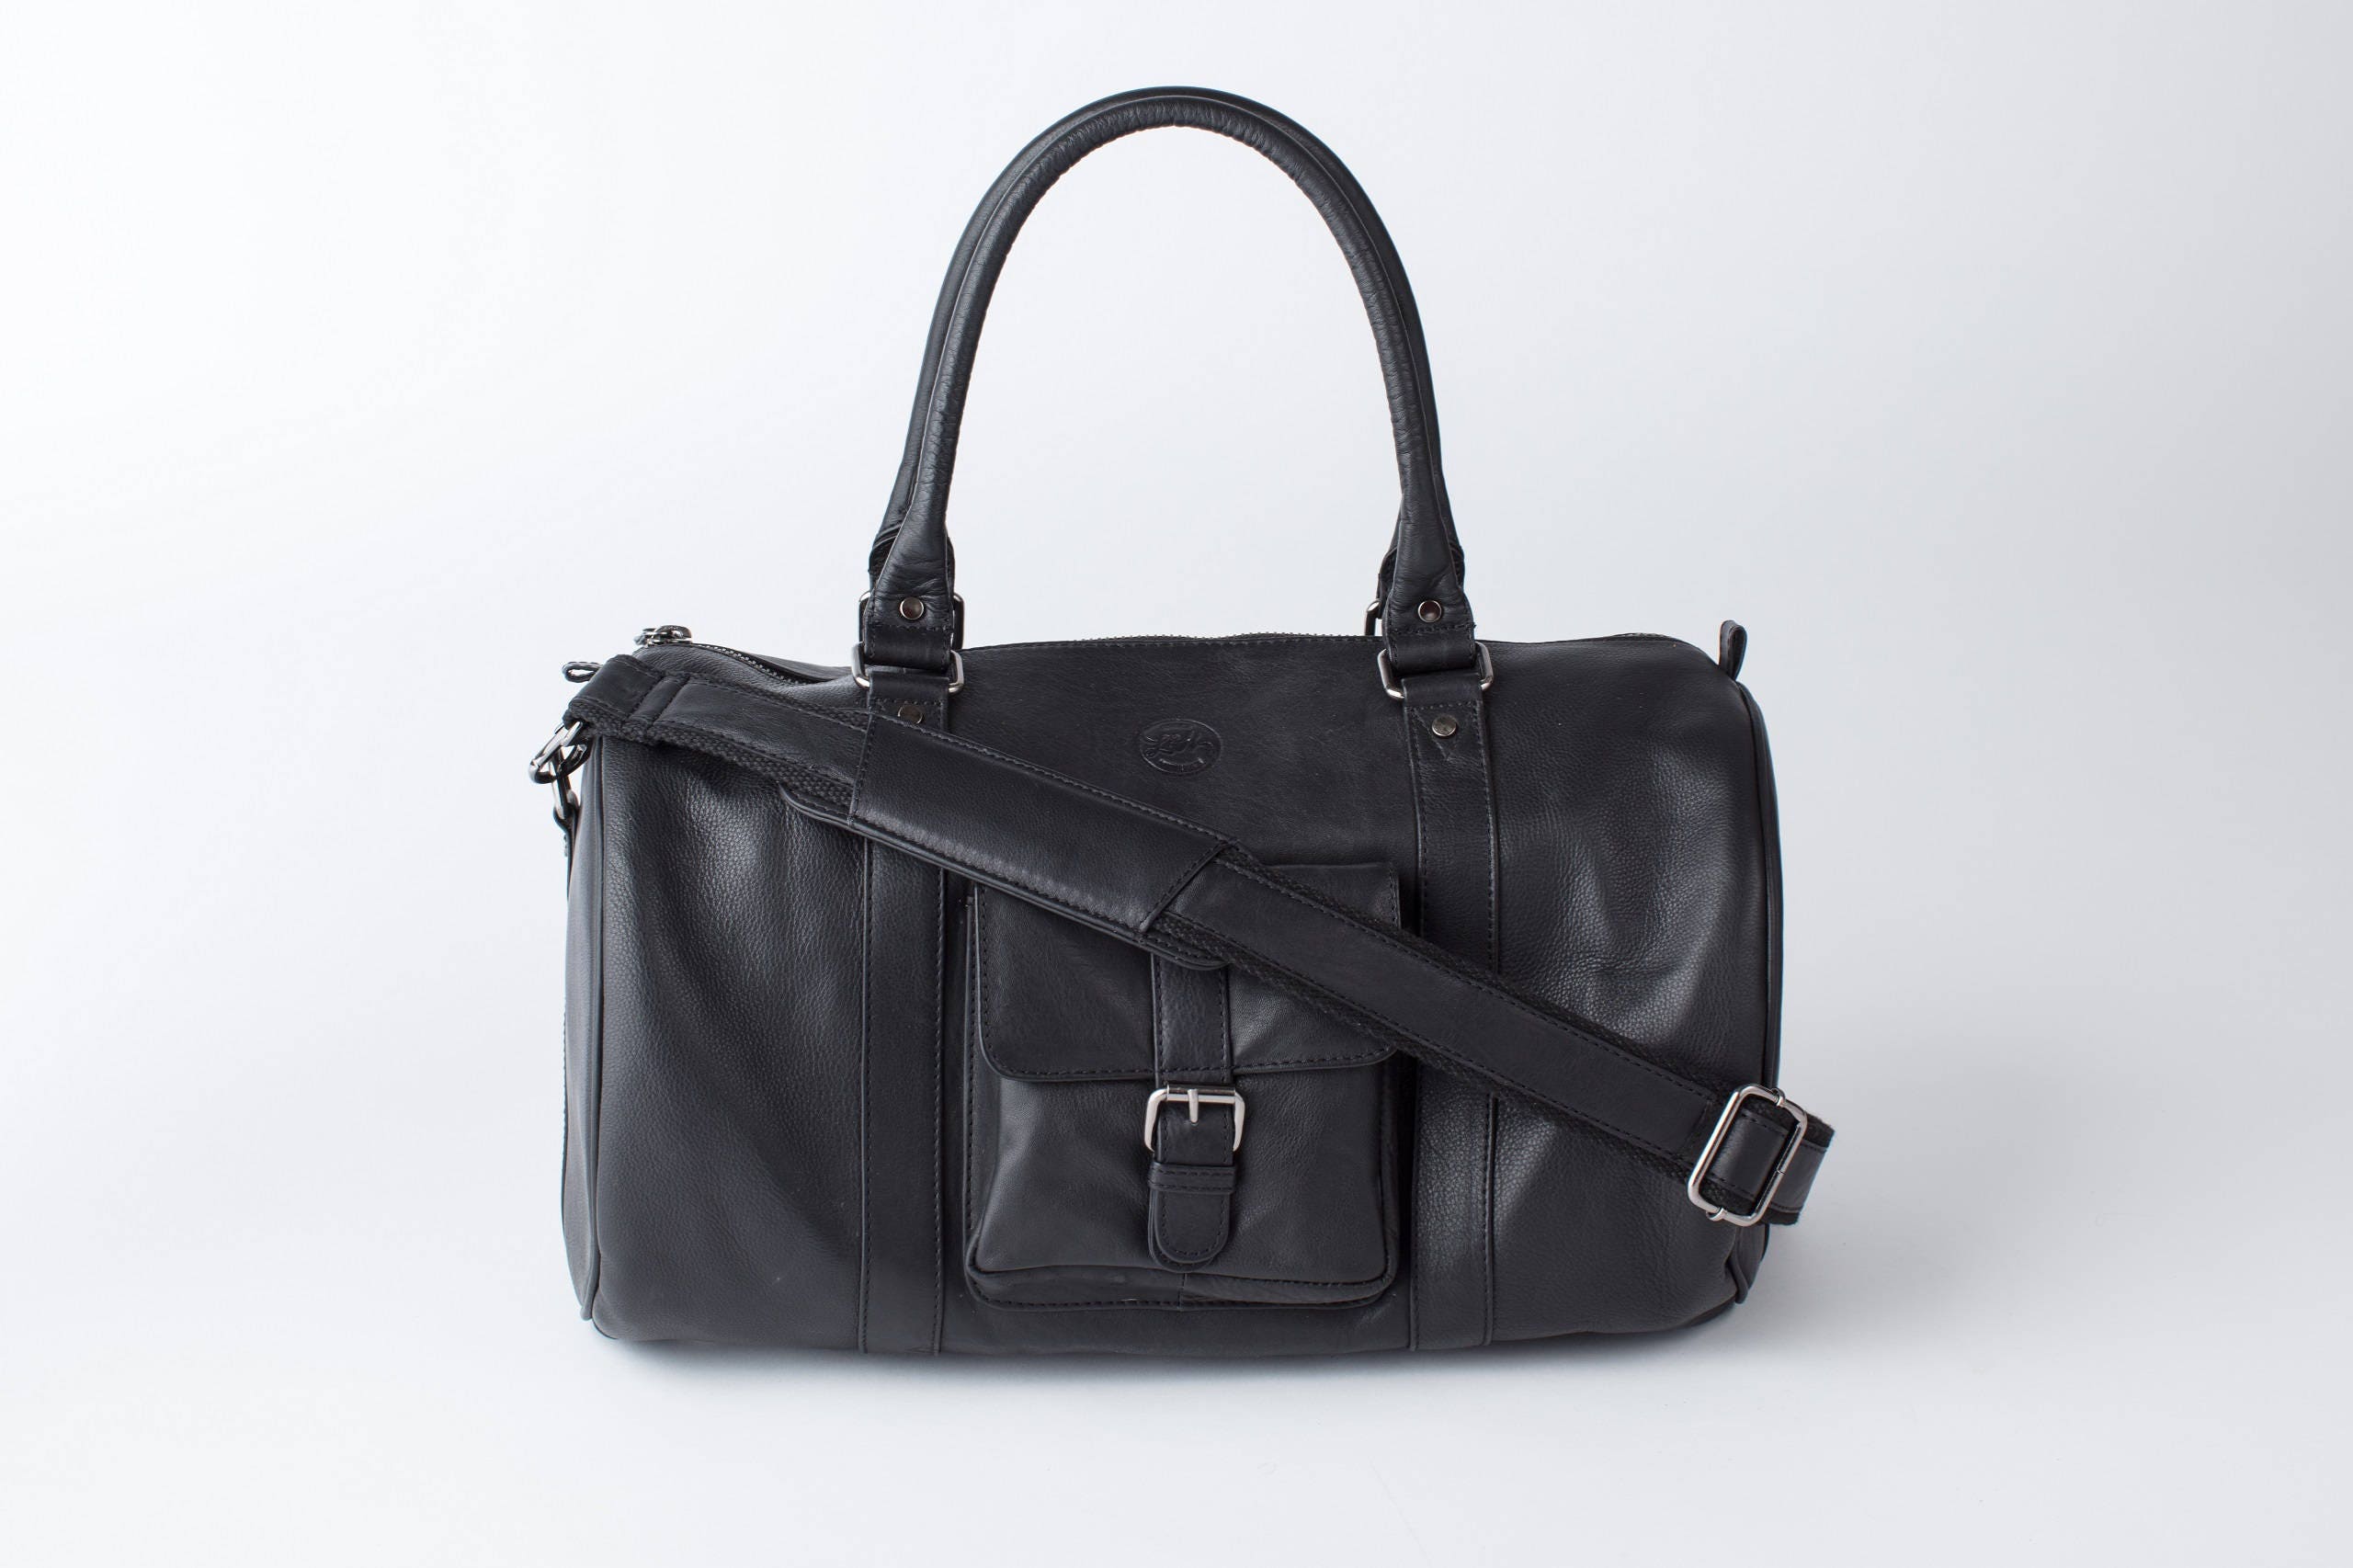 LEATHER DUFFLE BAG Vintage style black leather holdall | Etsy